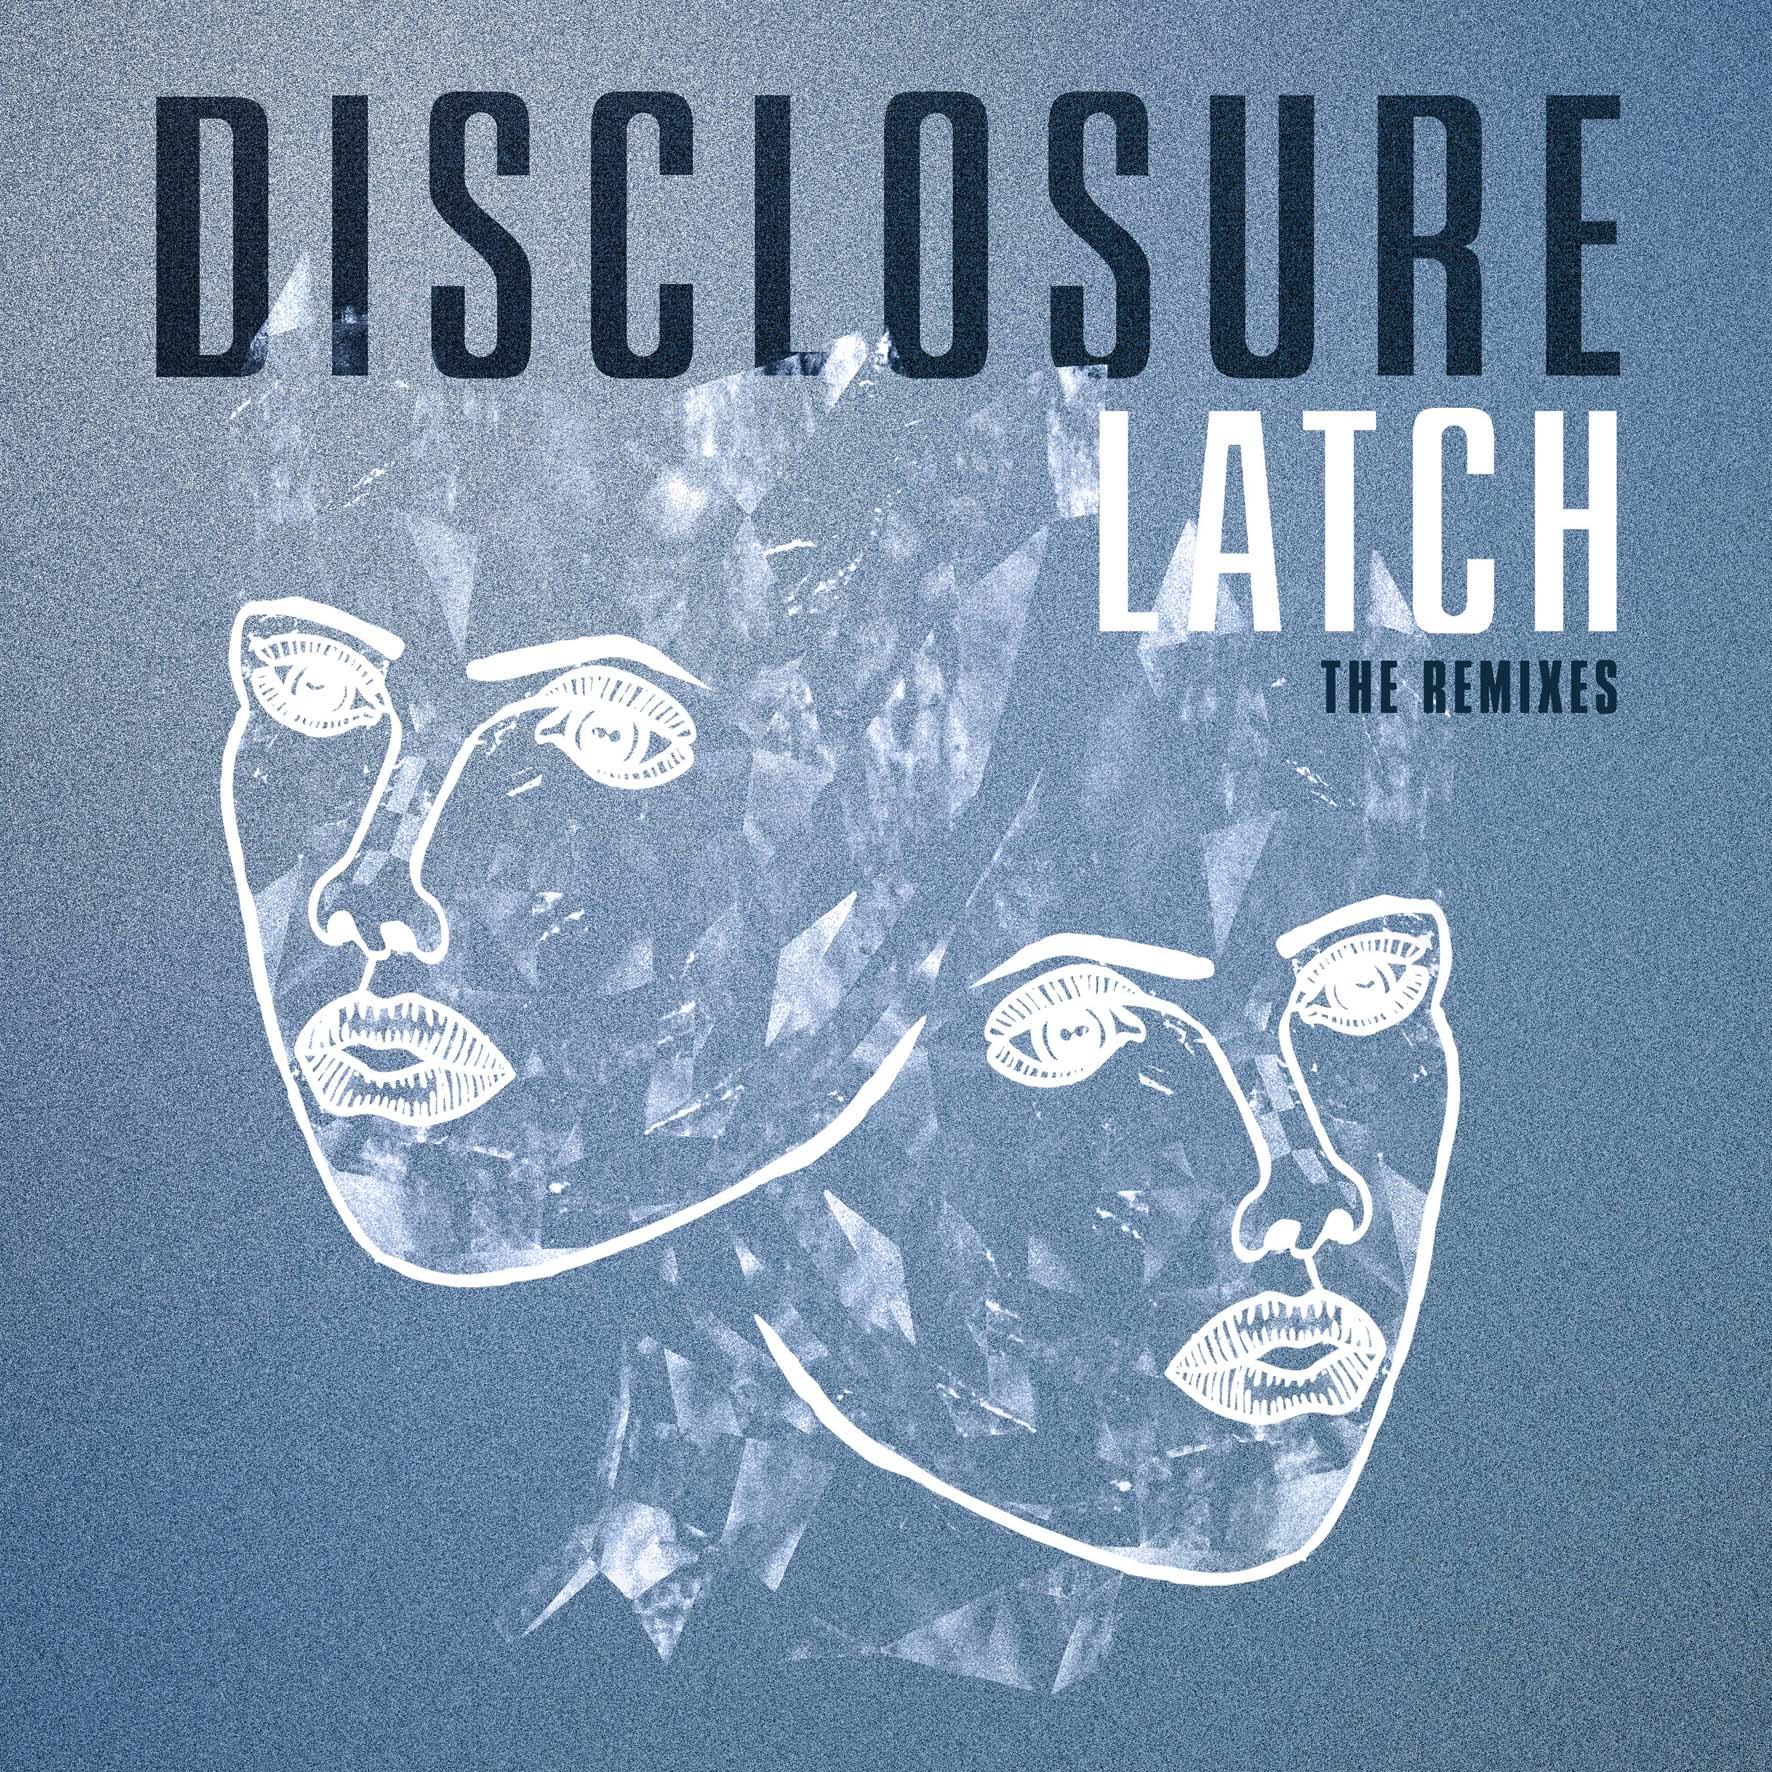 Disclosure - Latch (Jamie Jones 'Marzy's House' remix)